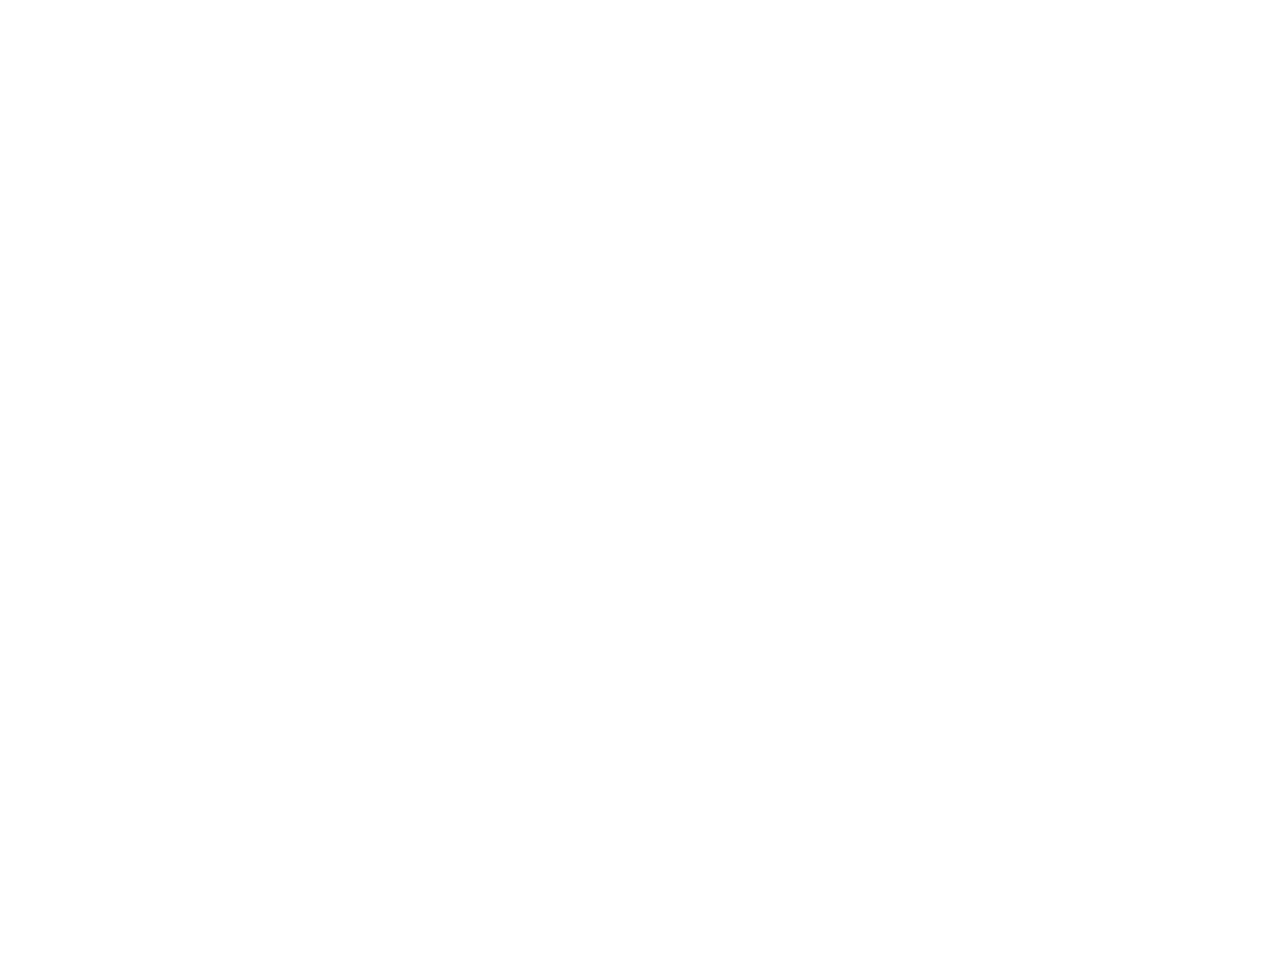 Arroyo La Jara